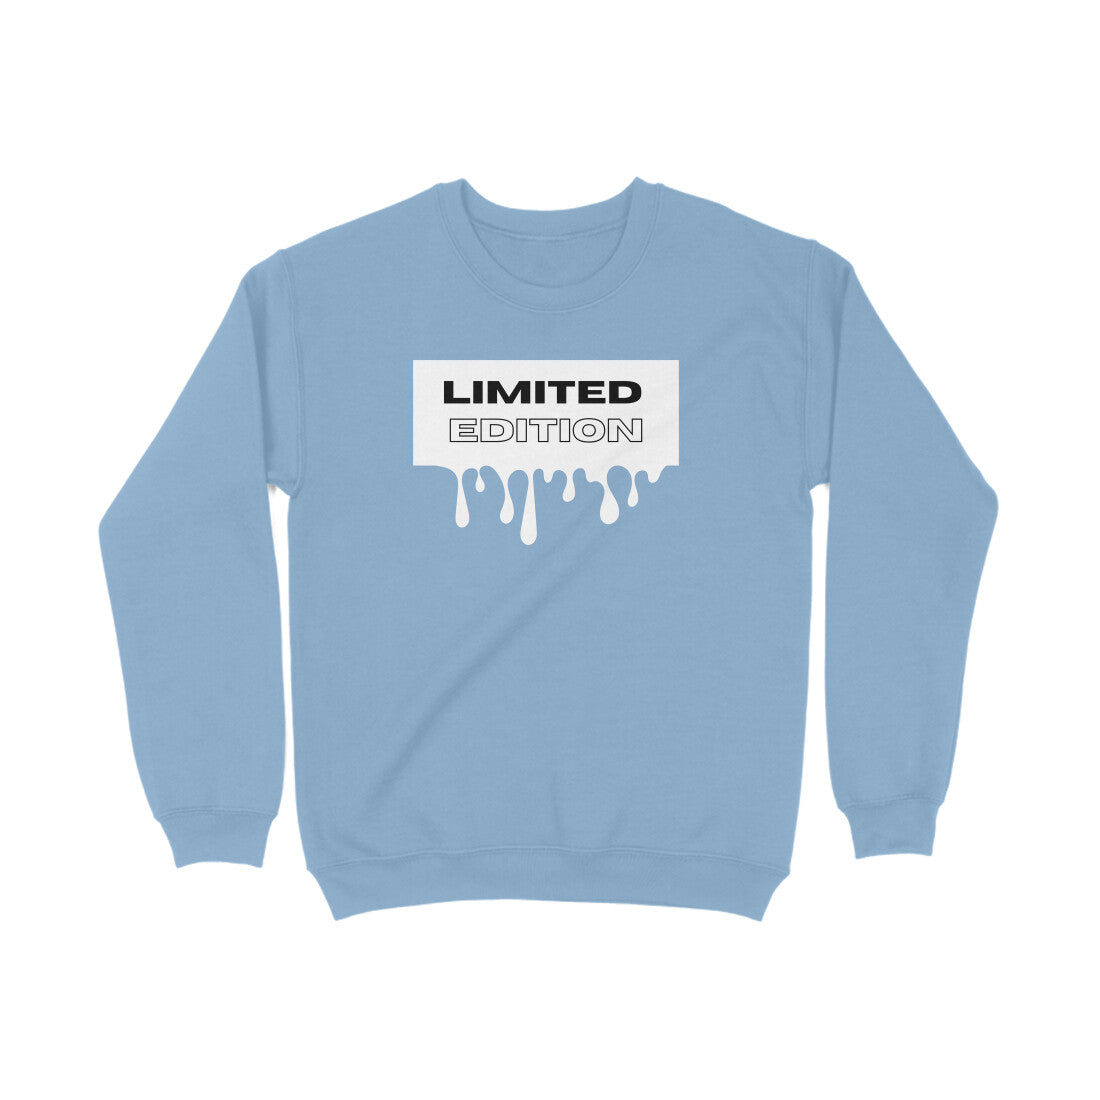 Limited Edition - Unisex Sweatshirt